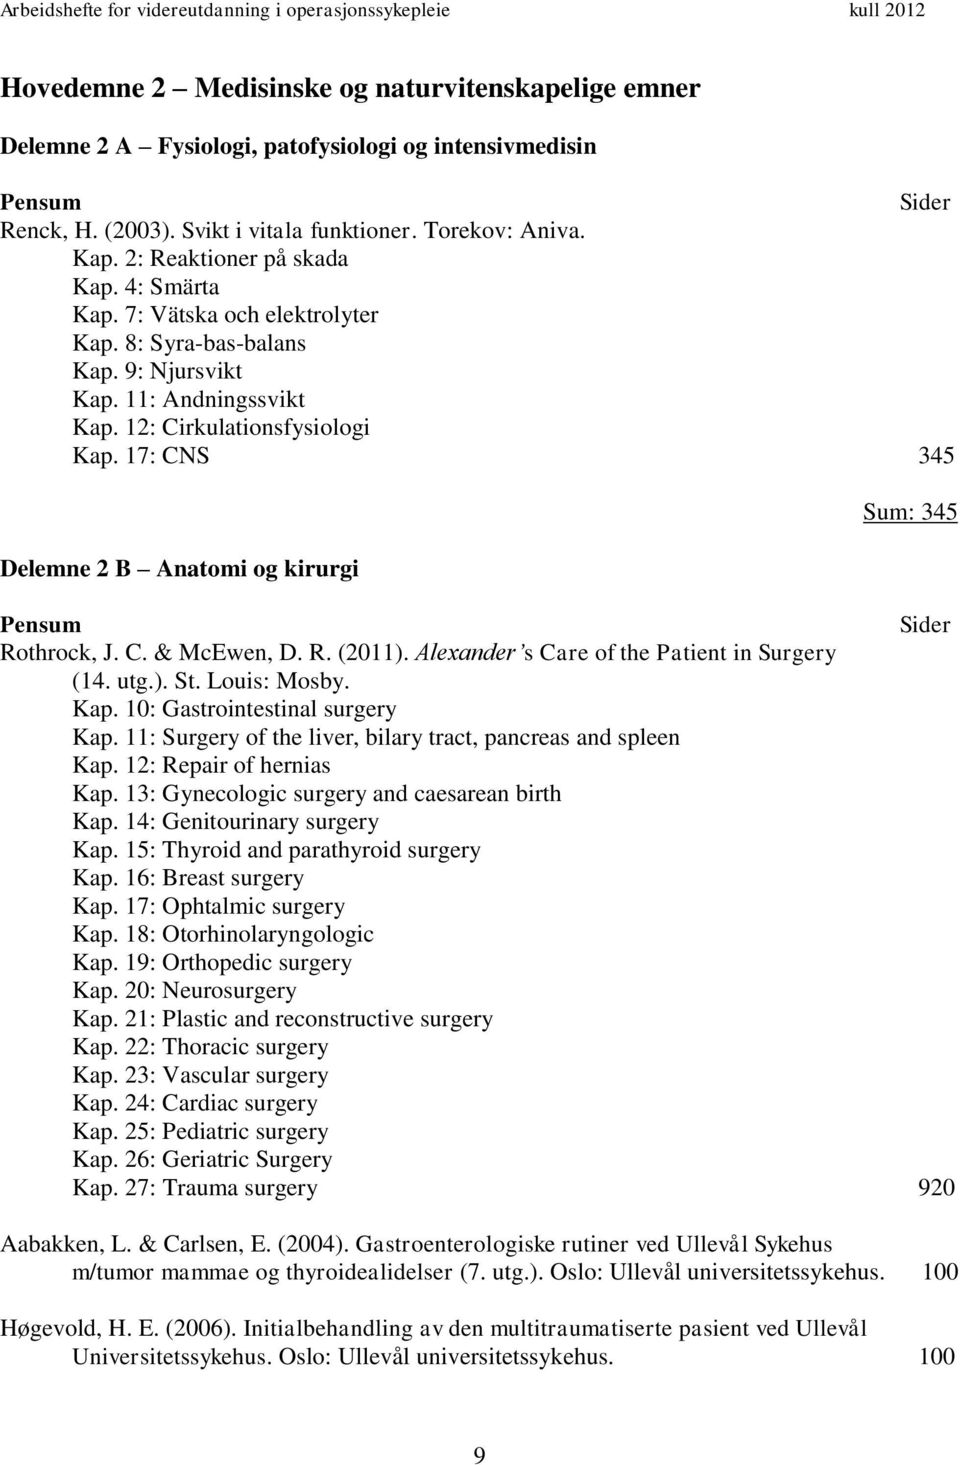 17: CNS 345 Delemne 2 B Anatomi og kirurgi Sum: 345 Pensum Sider Rothrock, J. C. & McEwen, D. R. (2011). Alexander s Care of the Patient in Surgery (14. utg.). St. Louis: Mosby. Kap.